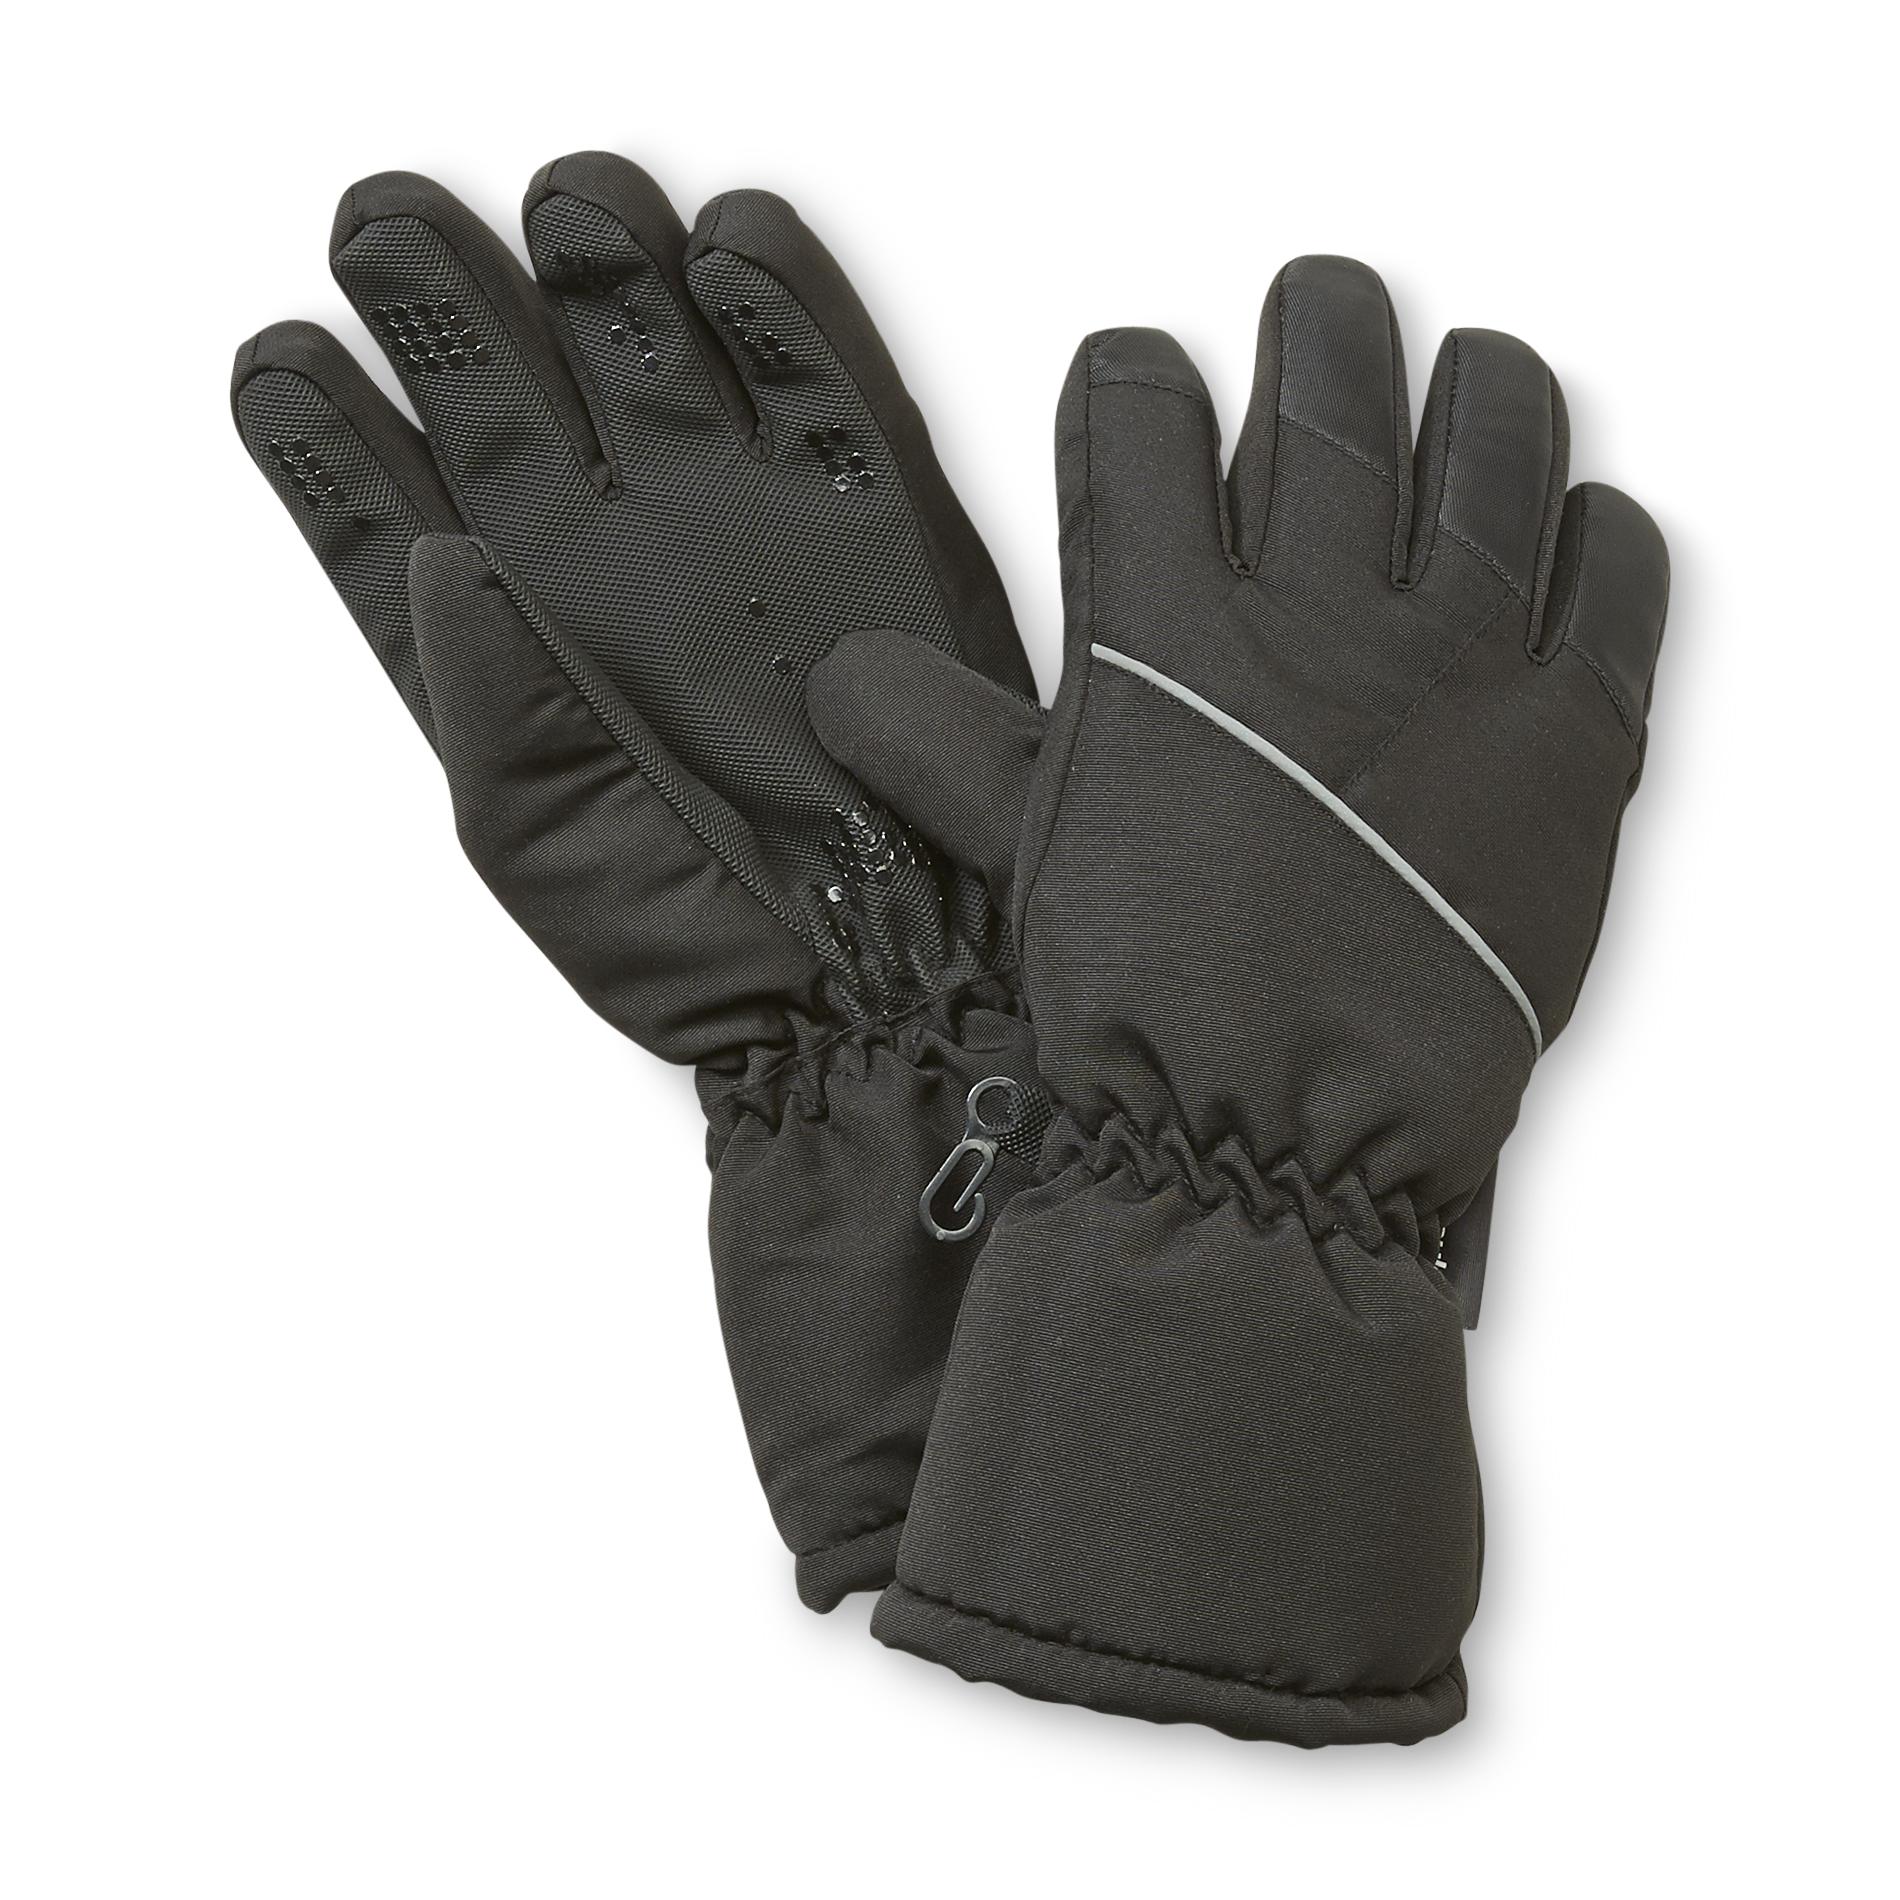 Athletech Boy's Long Cuff Thinsulate Gloves